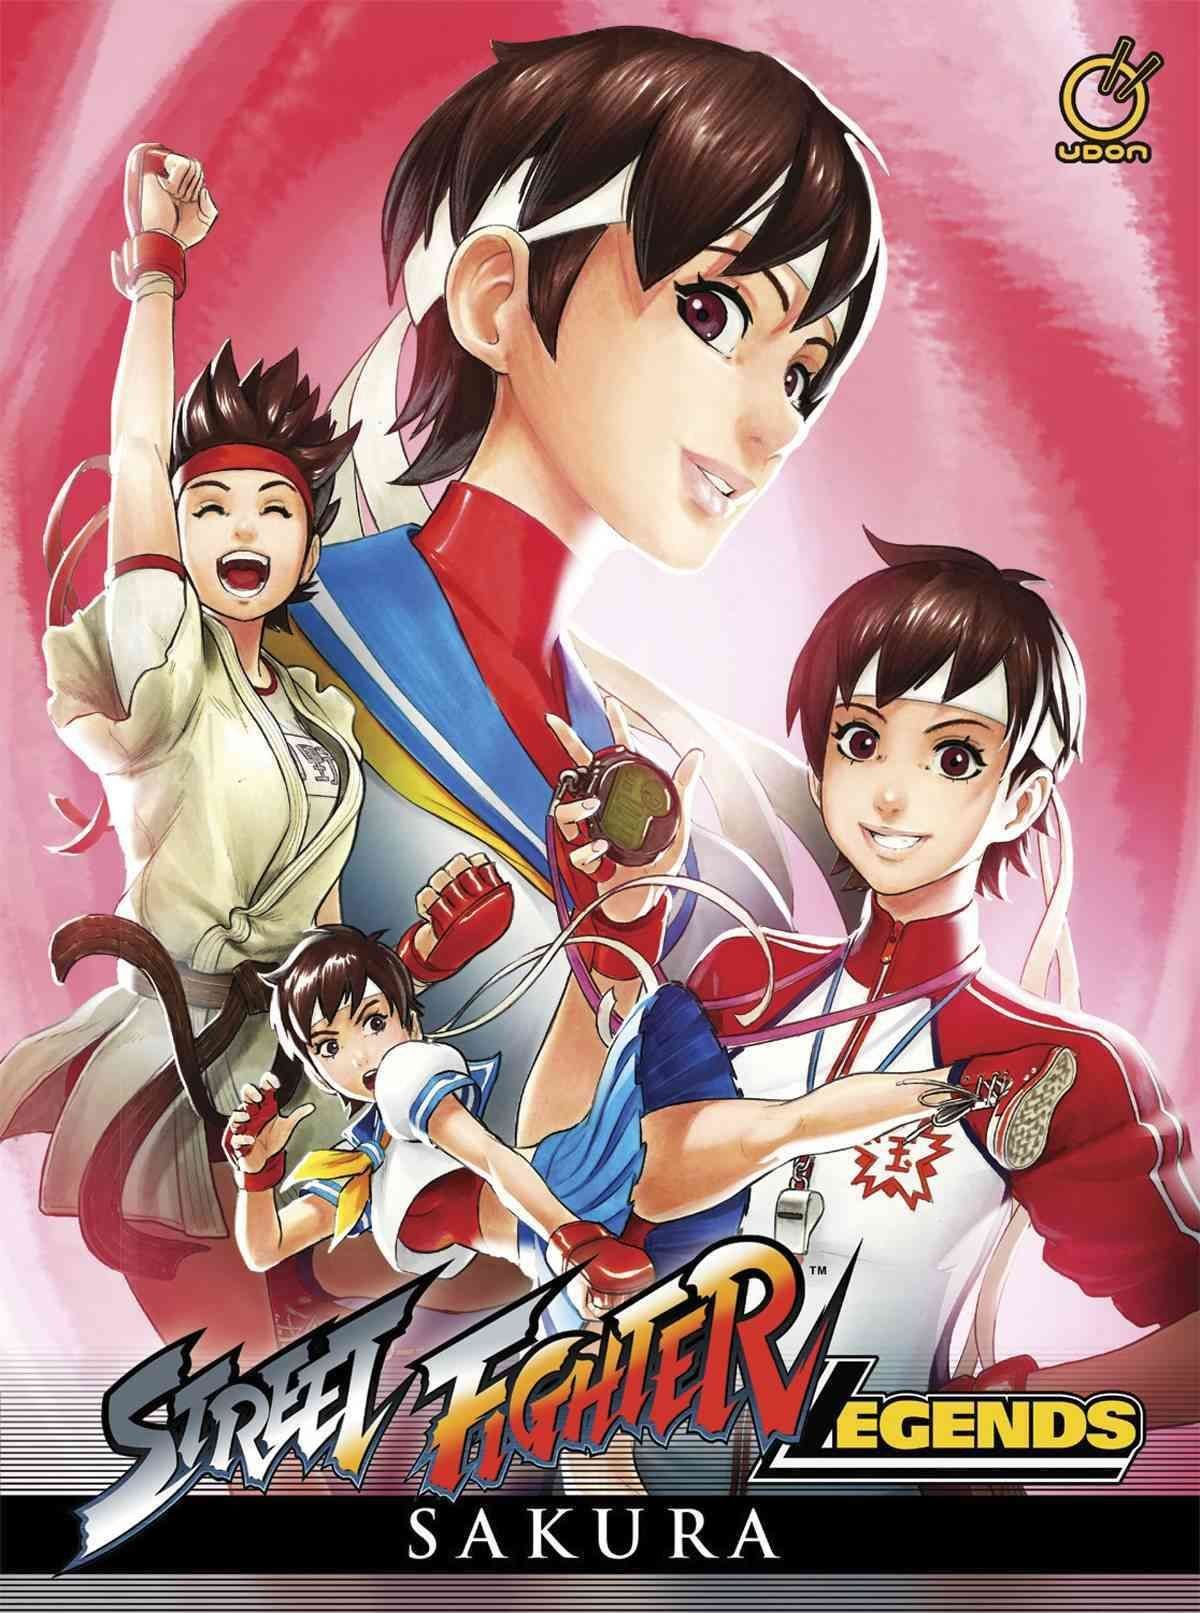 Buy Street Fighter Legends: Sakura by Ken Siu-Chong With Free